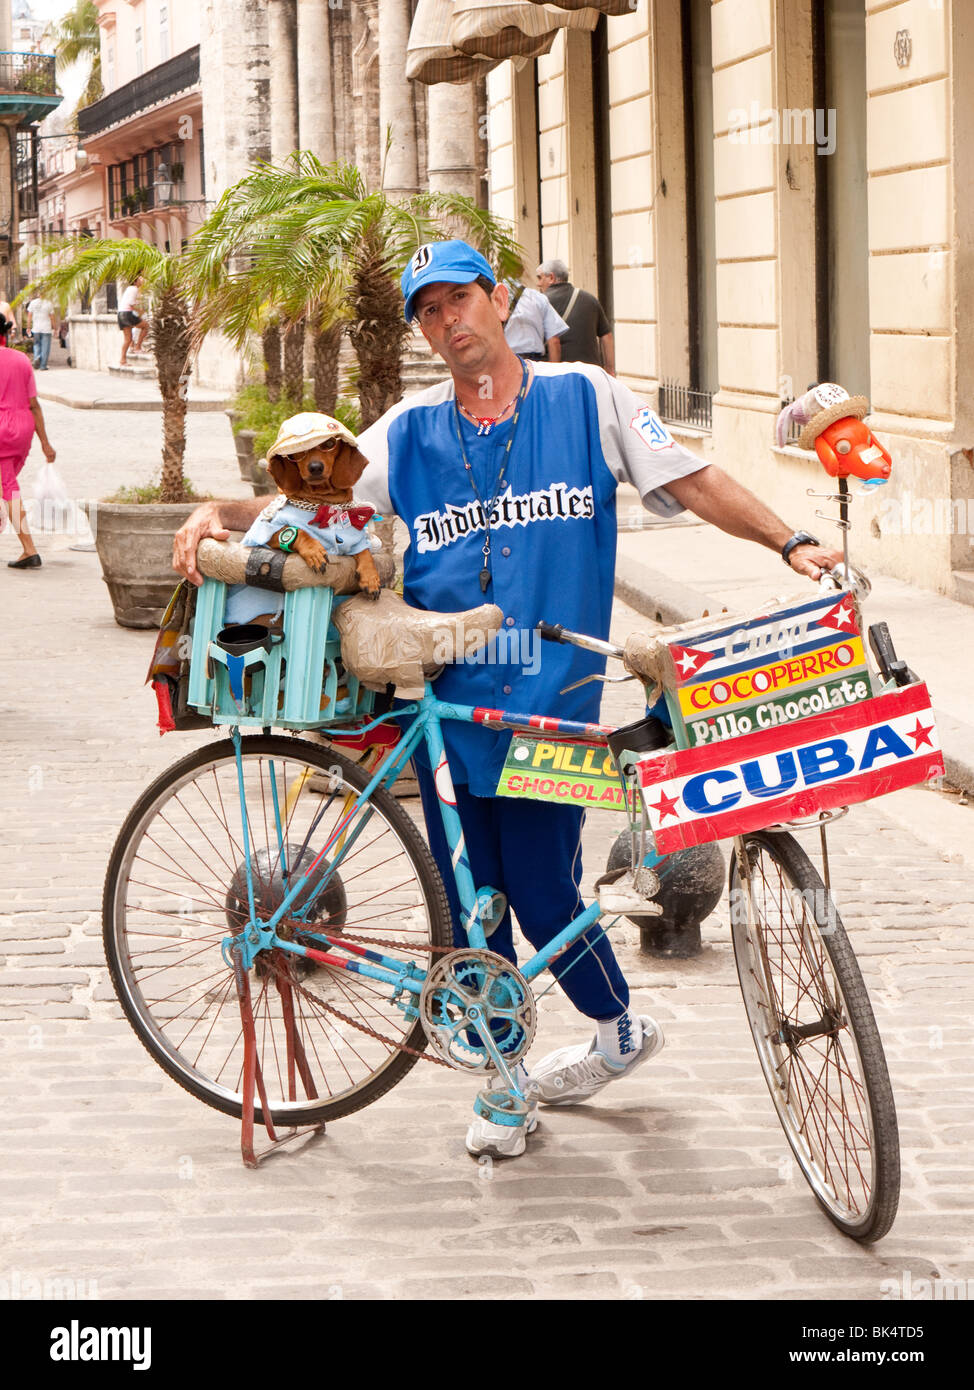 Fahrrad Straße Verkäufer mit Hund verkaufen Schokolade in Alt-Havanna, Kuba Stockfoto